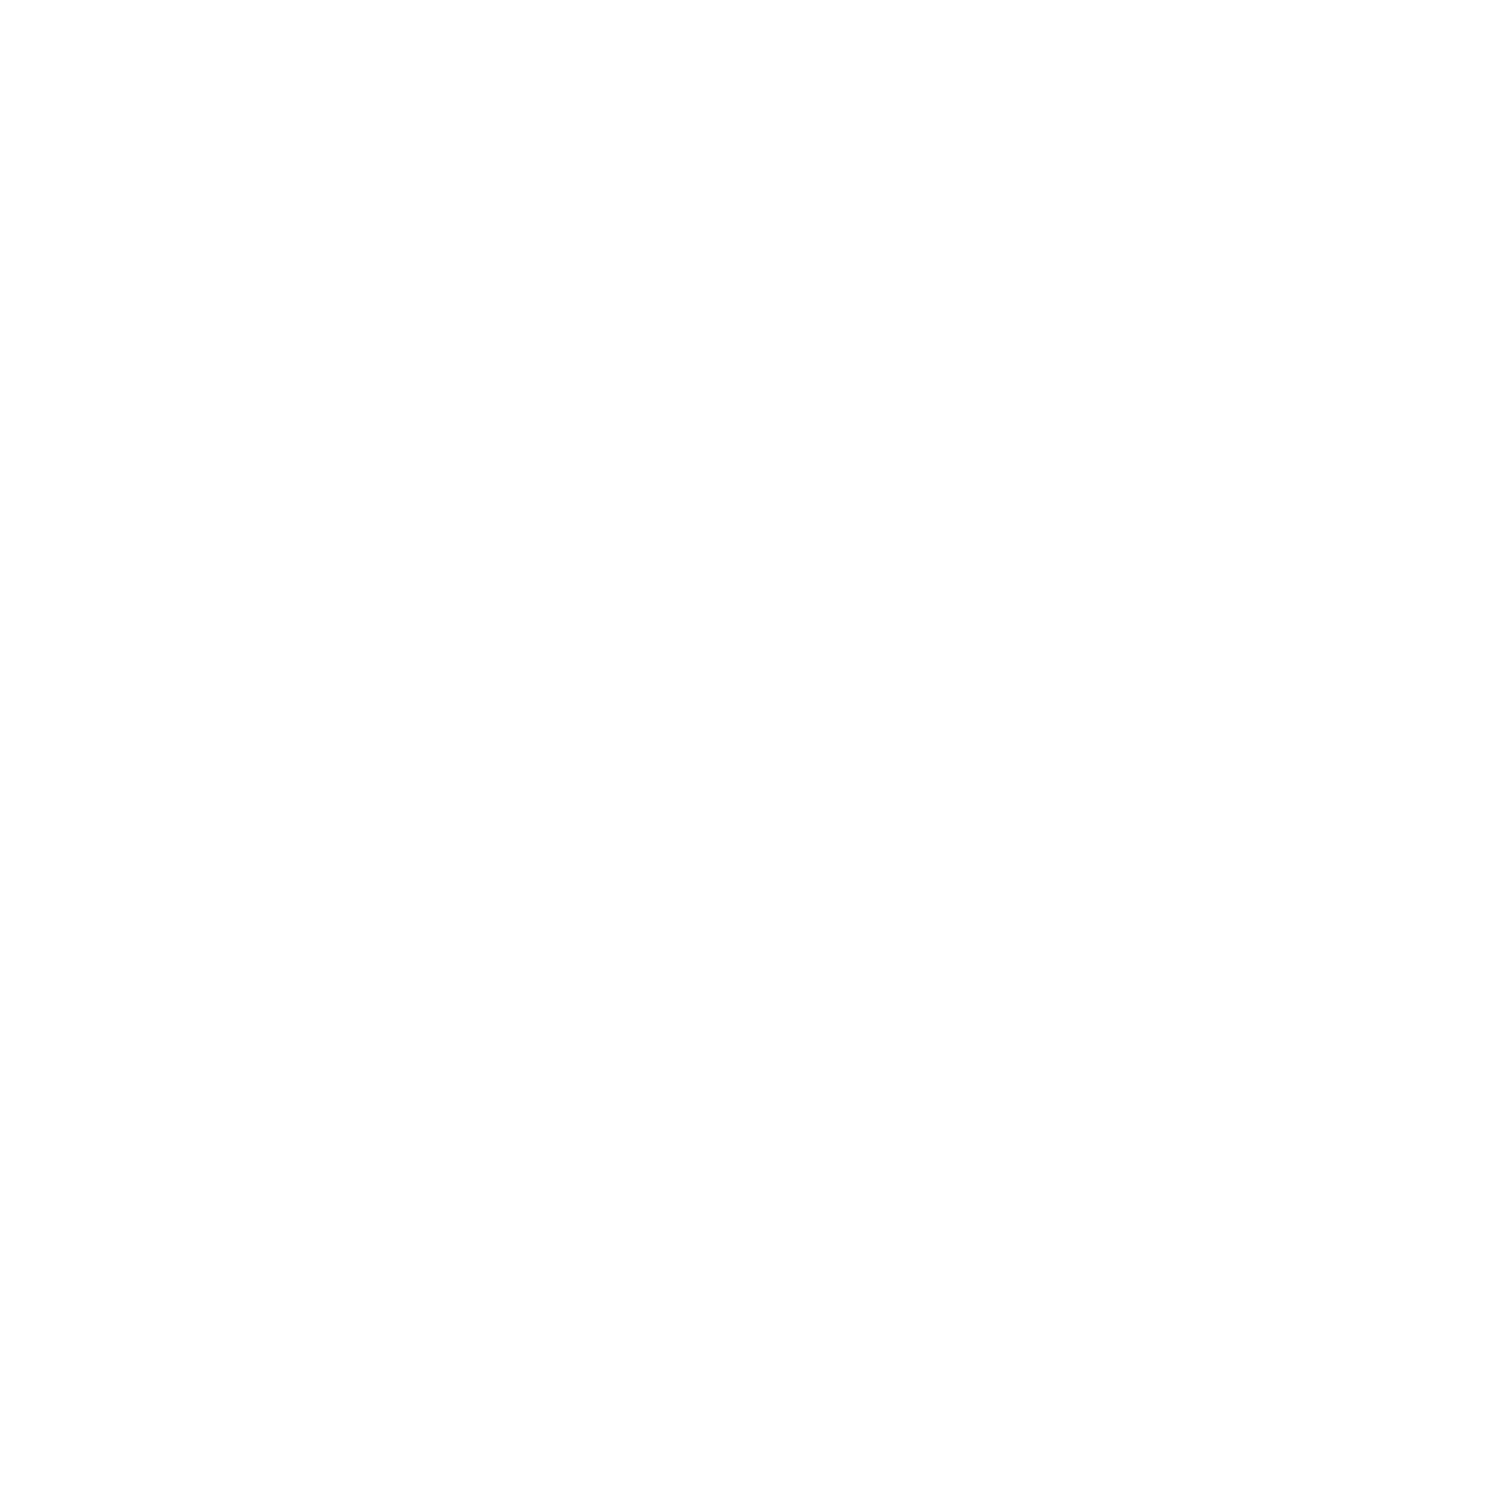 Poppy Salon & Spa